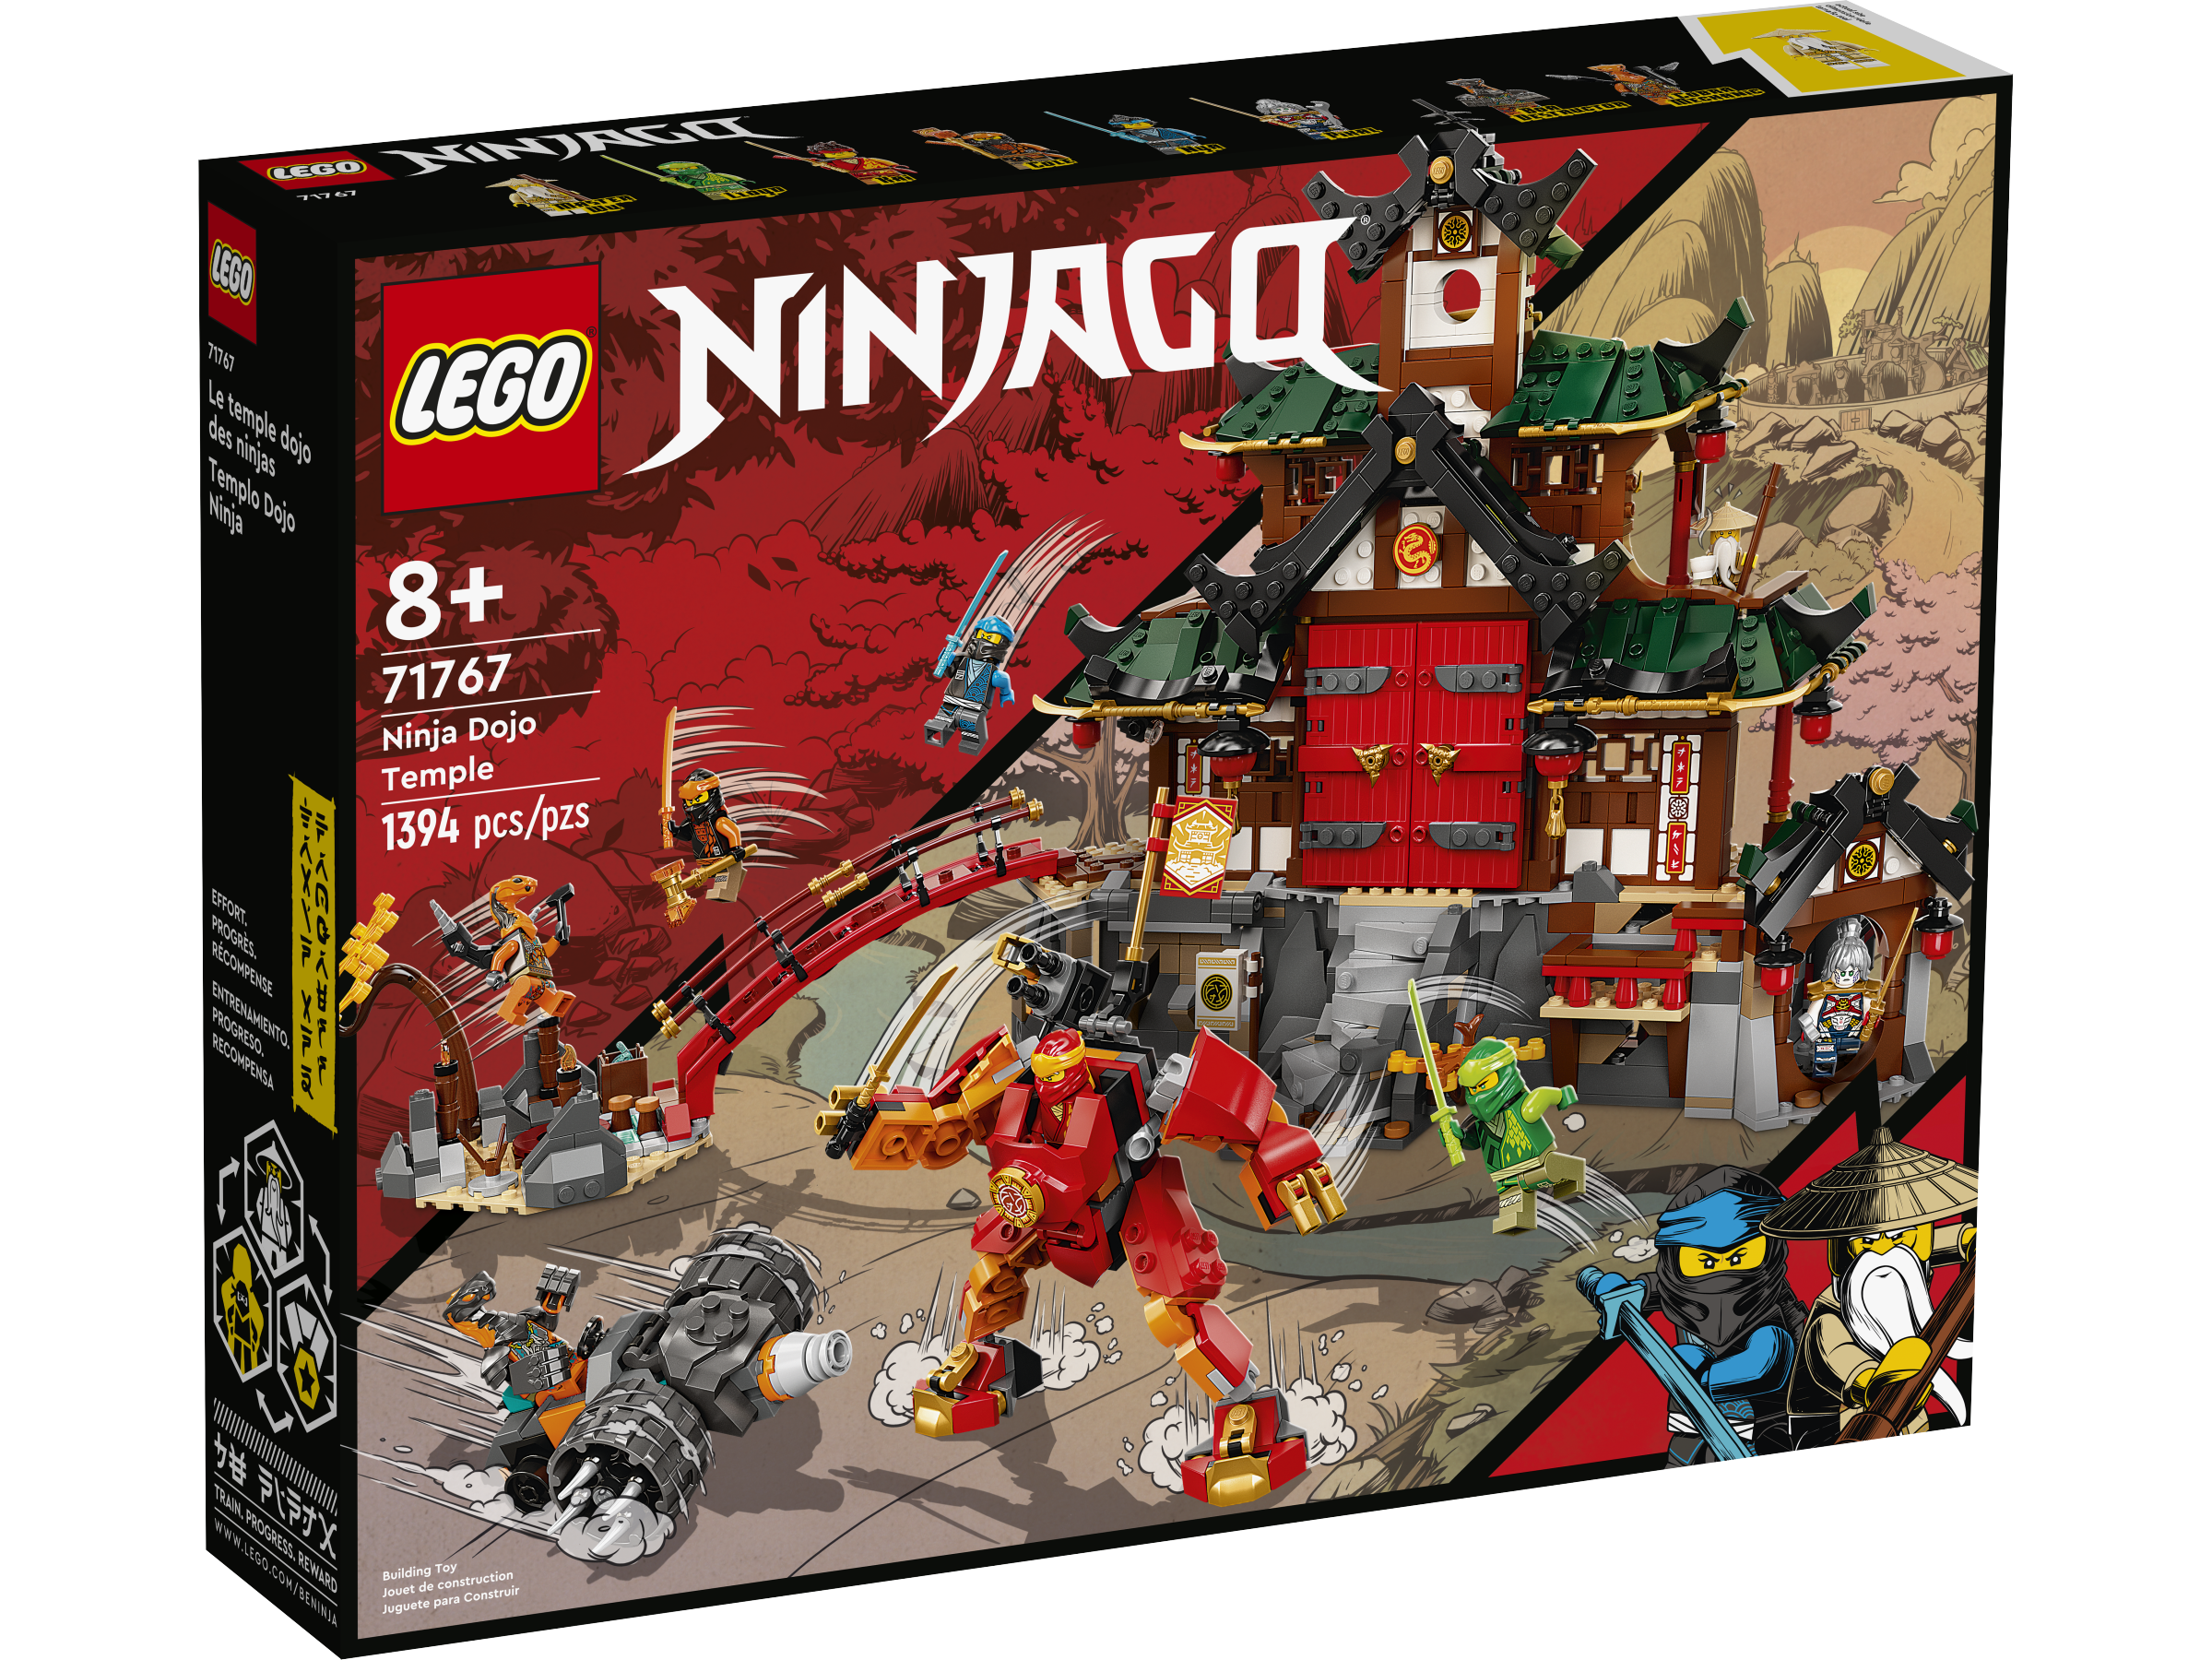 LEGO Ninjago - Ninja-dojotempel (71767)